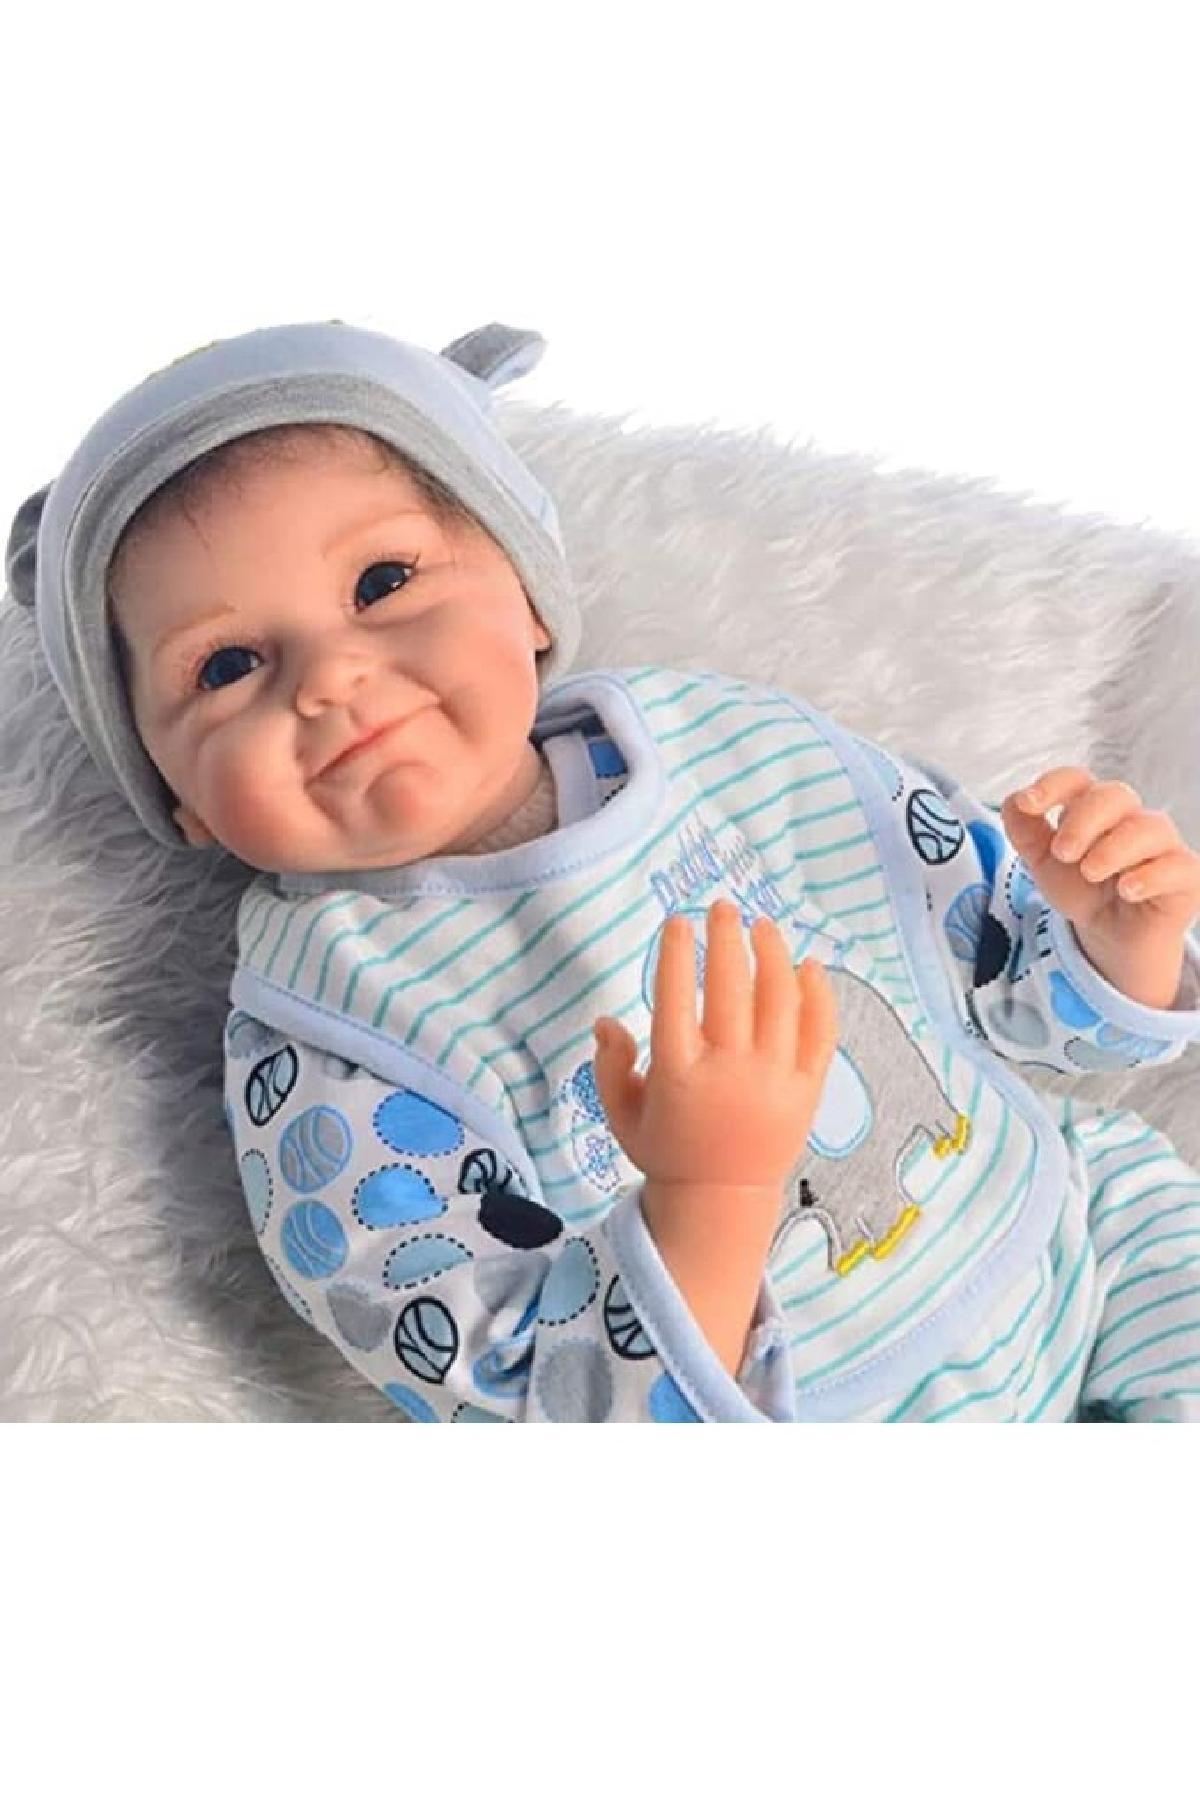 عروسک سیلیکونی نوزاد پسر واقعی کد.1029